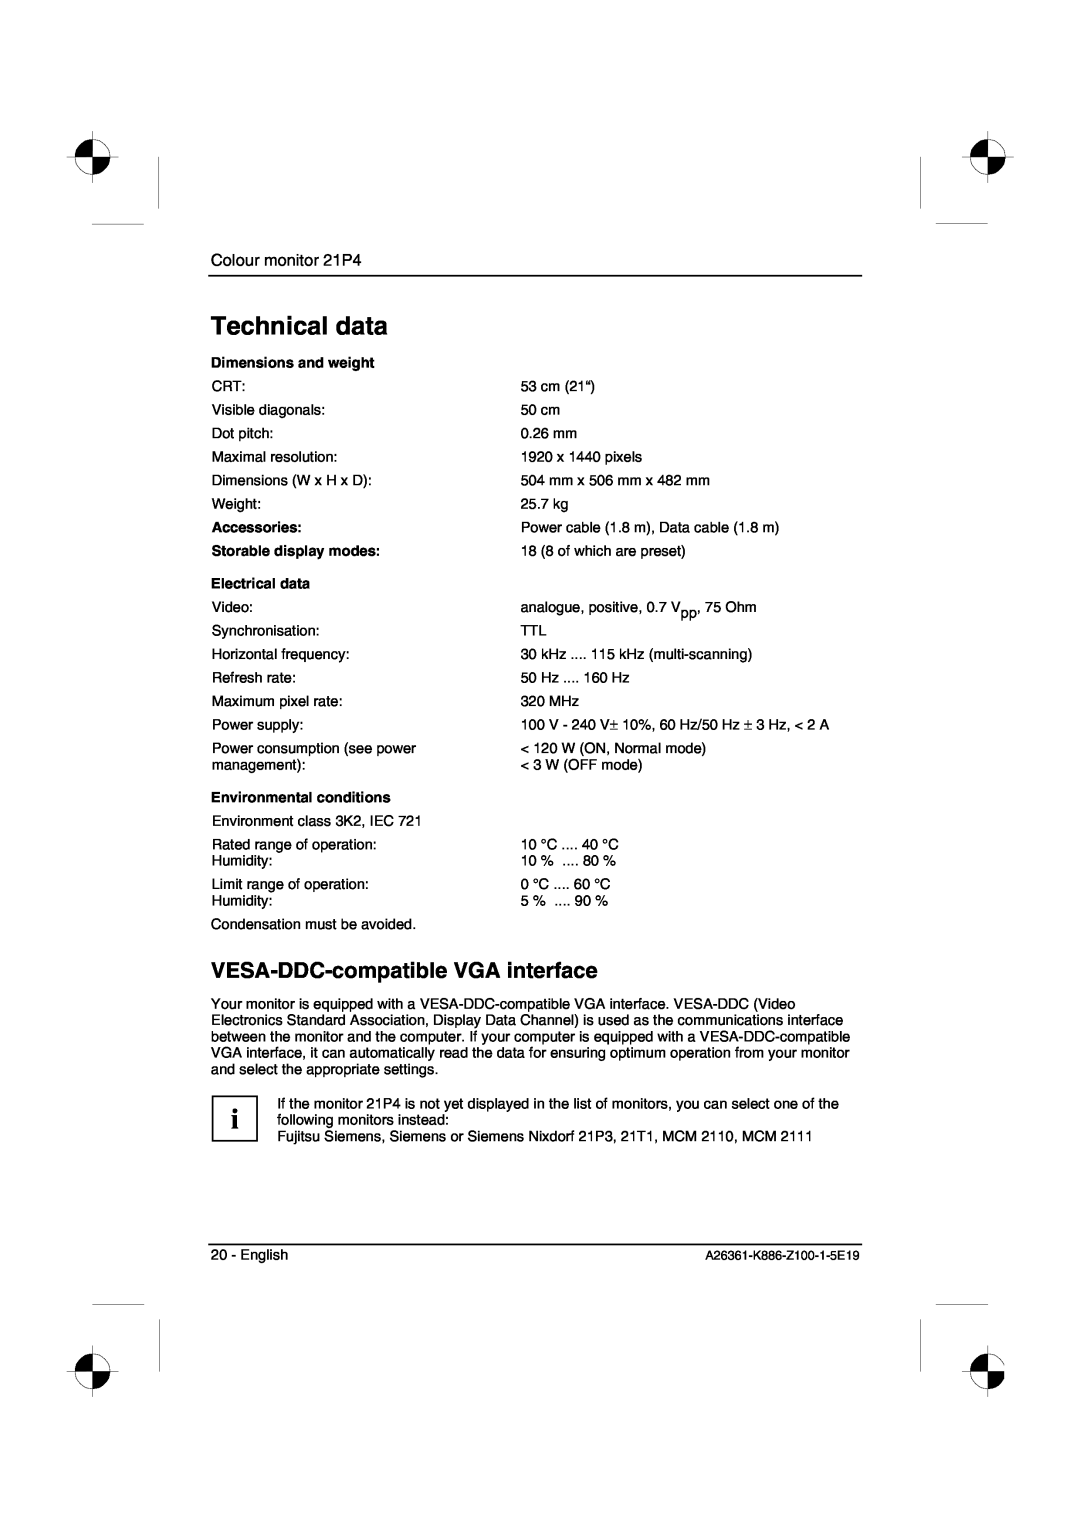 Fujitsu Siemens Computers 21P4 manual Technical data, VESA-DDC-compatible VGA interface, Dimensions and weight, Accessories 